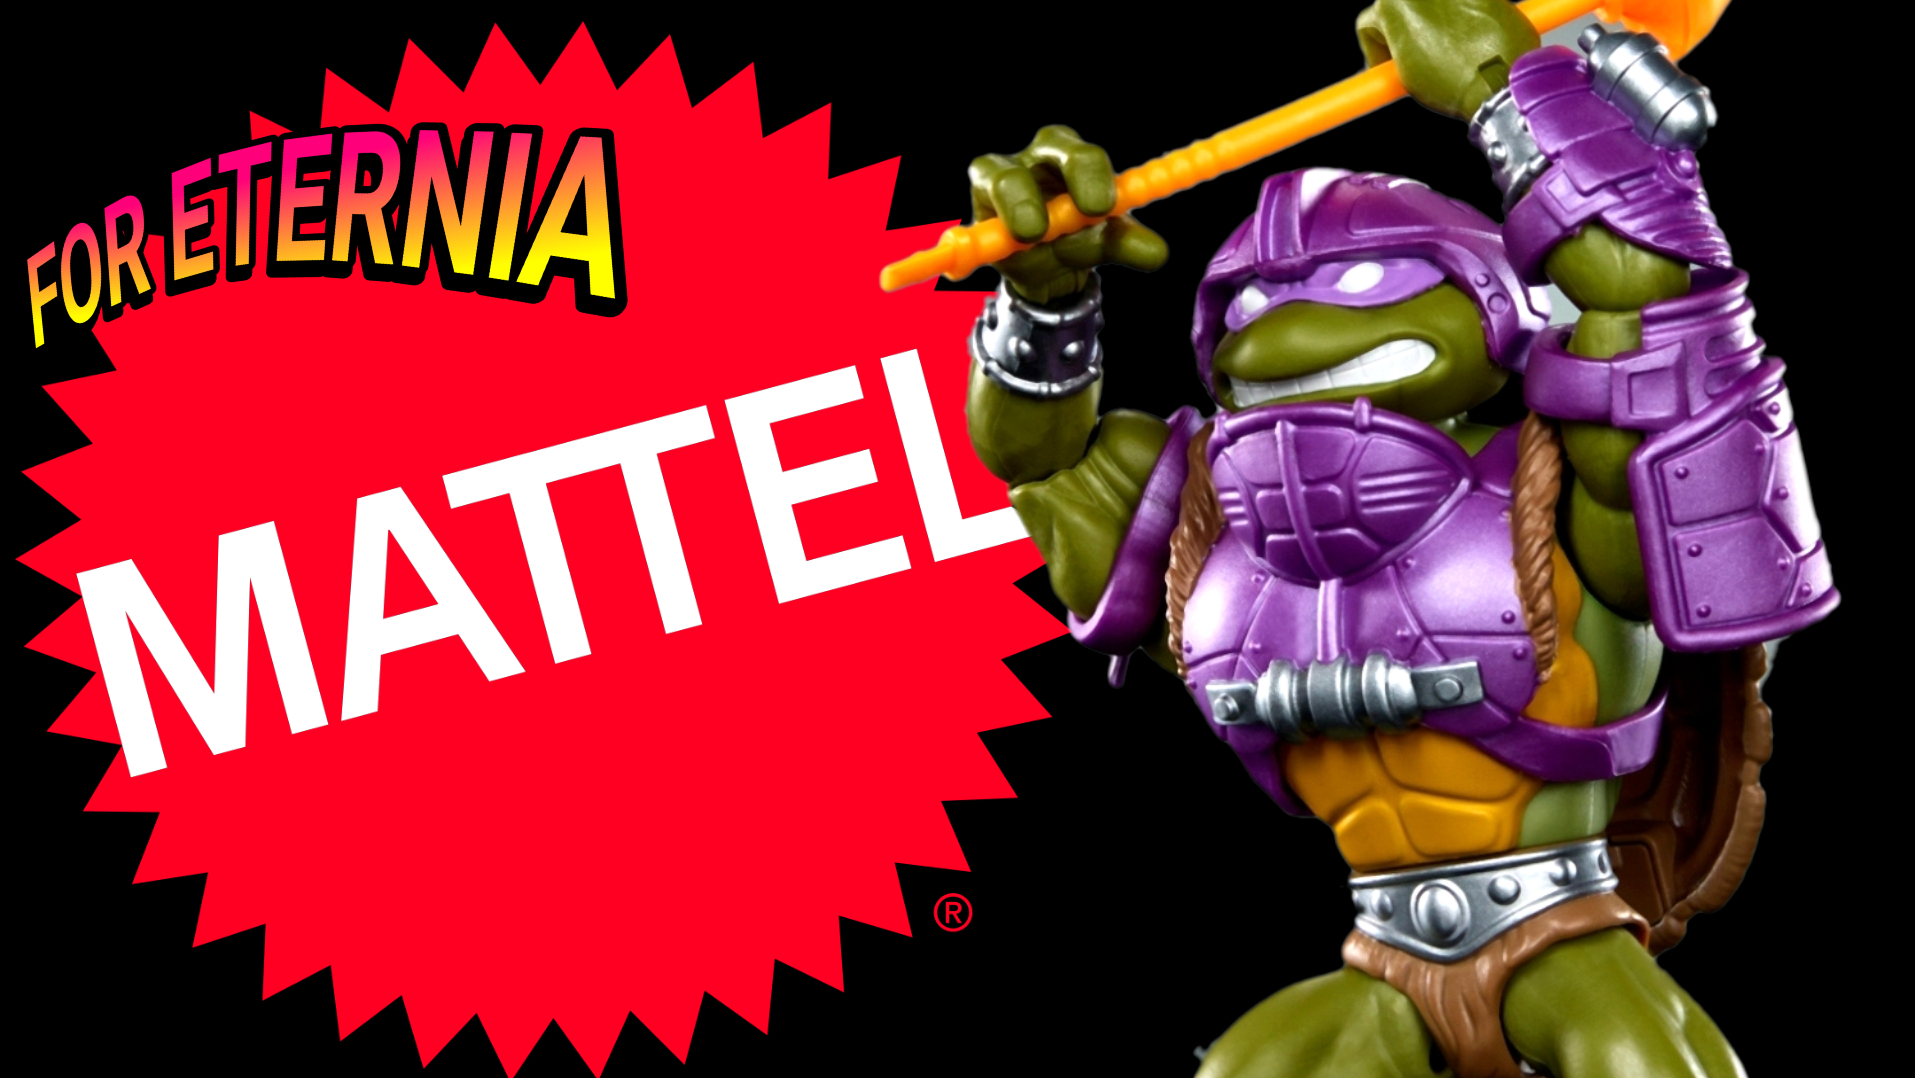 Conventions, Comics, Cowabunga! Mattel to ramp up promotion for ”Turtles of Grayskull” Origins action figure line?